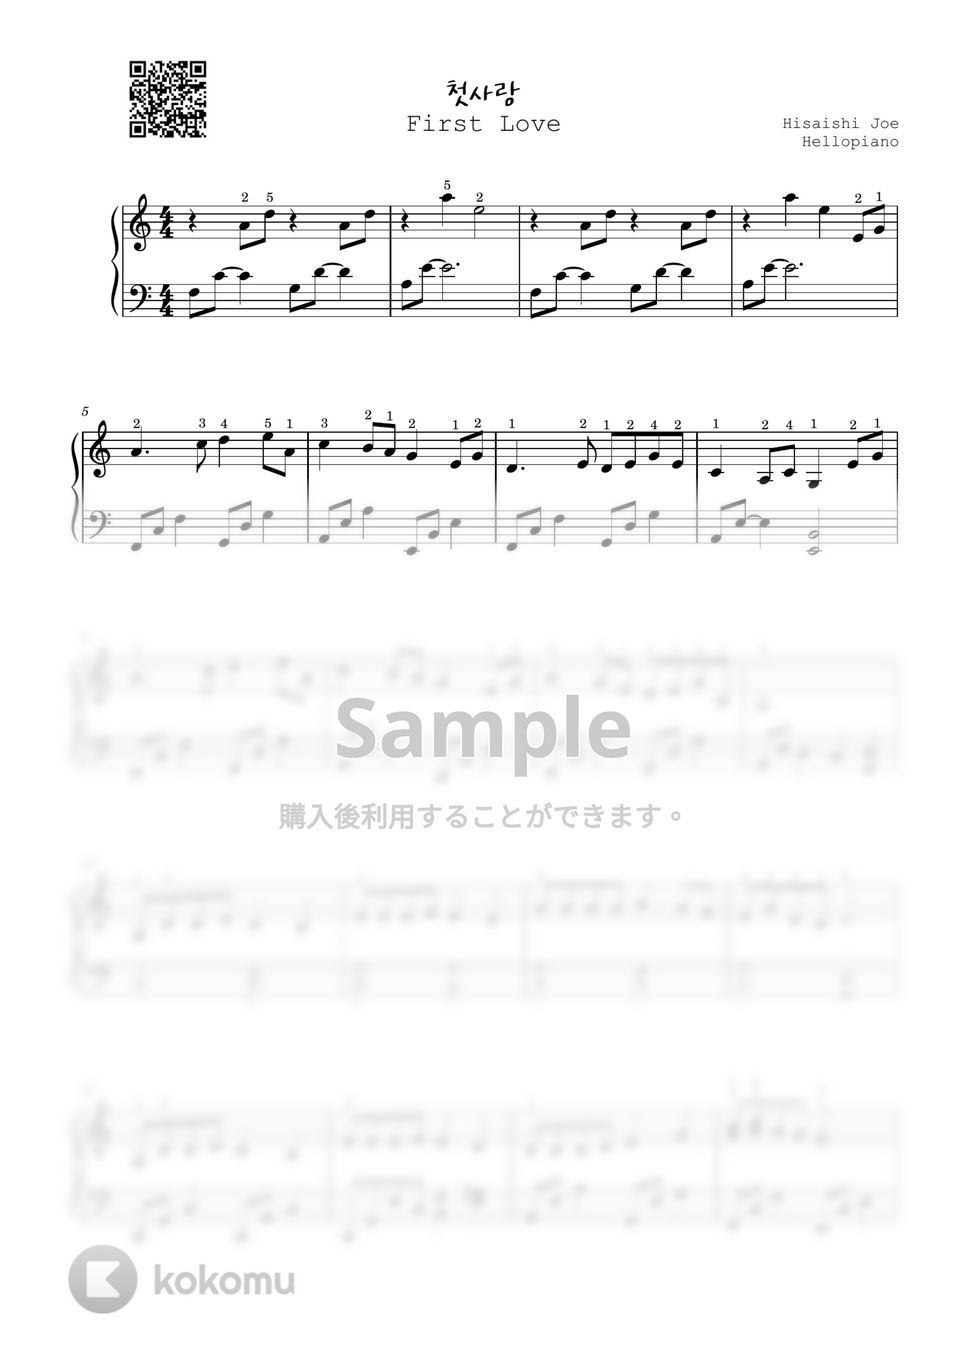 Hisaishi Joe - First Love (easy ver.) by Hellopiano